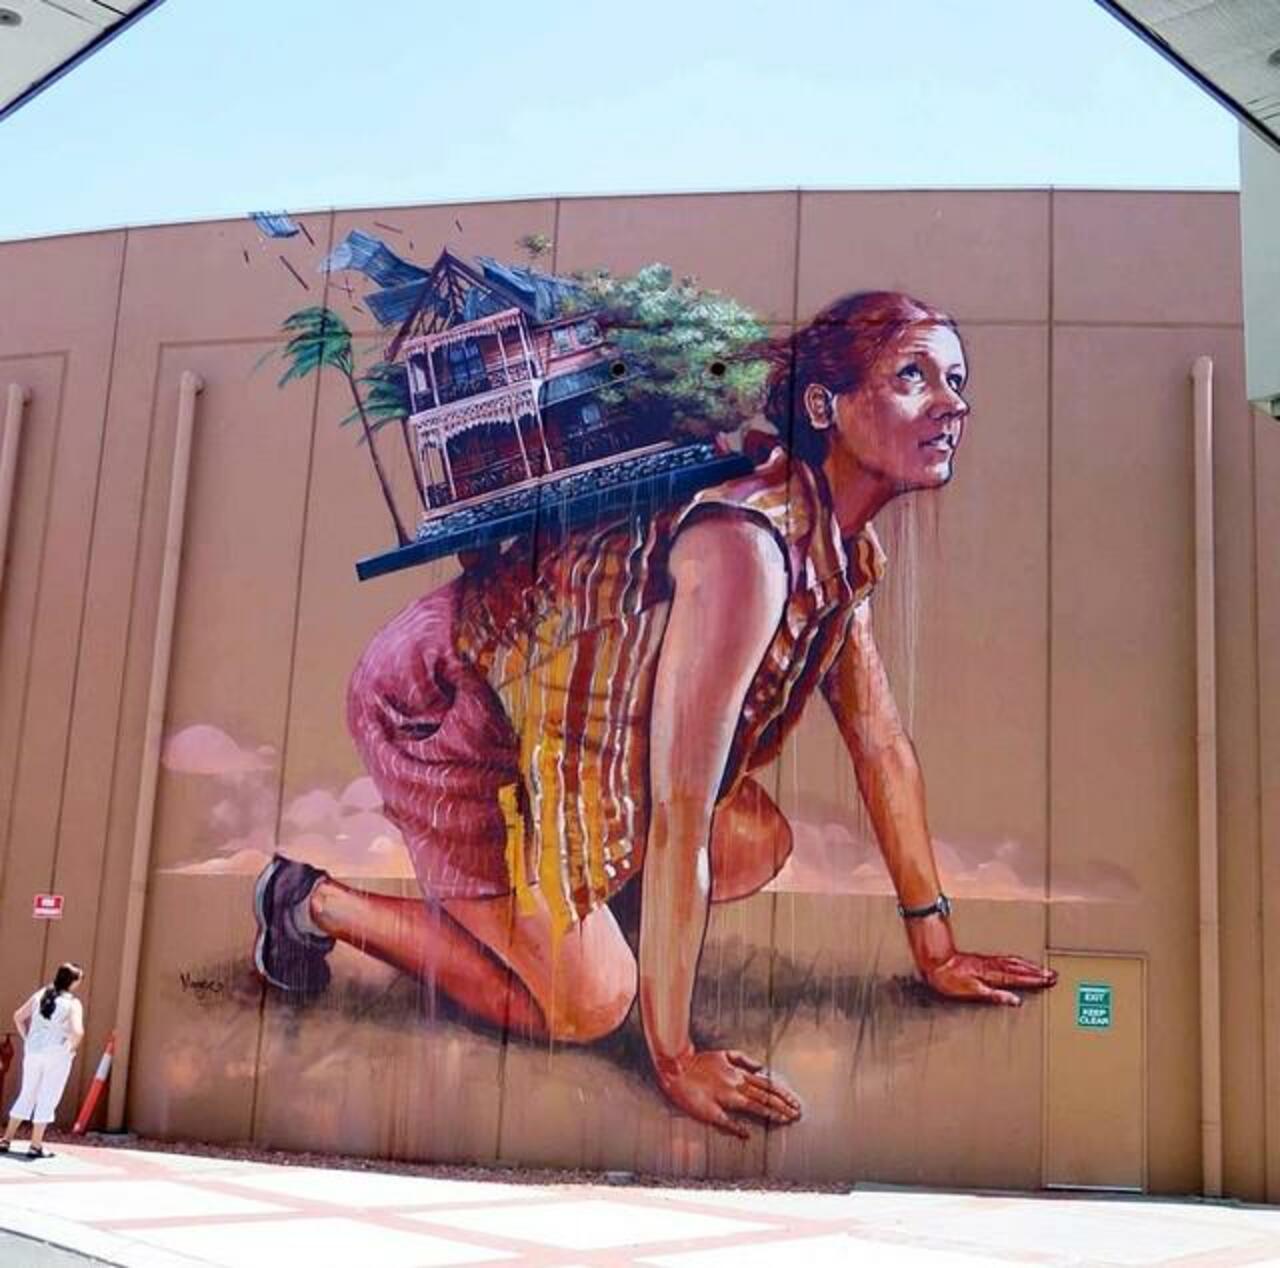 Latest Fintan Magee massive Street Art piece in Bunbury, Western Australia 

#art #graffiti #mural #streetart http://t.co/gZnsV7w172